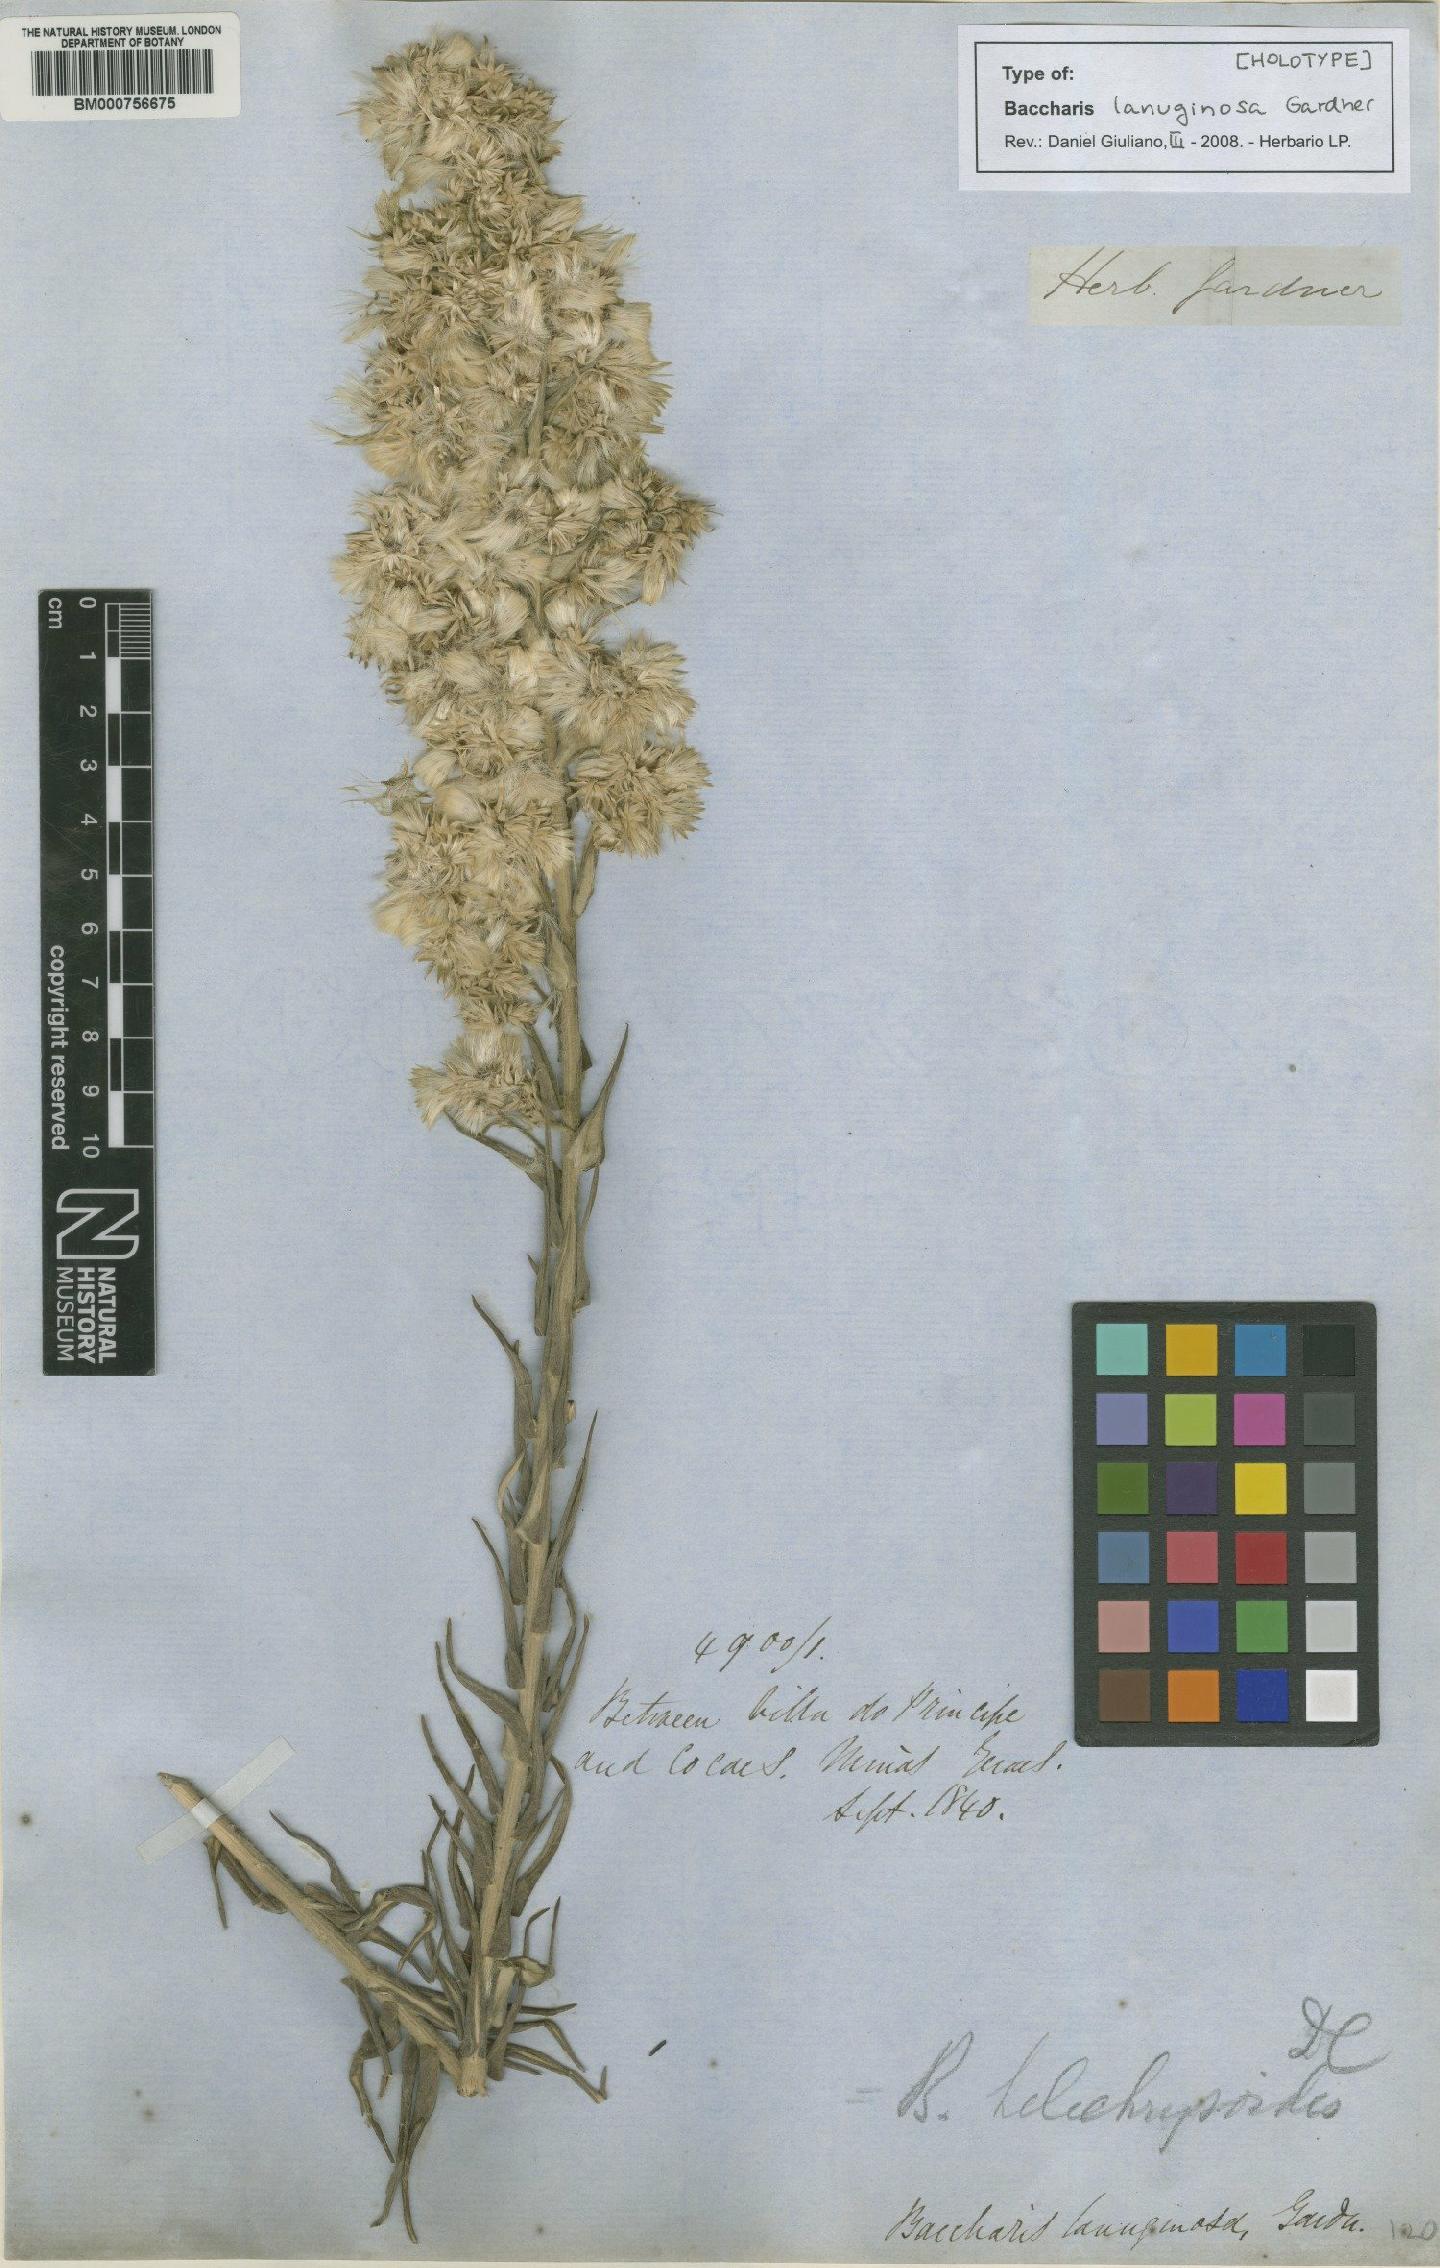 To NHMUK collection (Baccharis lanuginosa Gardner; Holotype; NHMUK:ecatalogue:4697000)